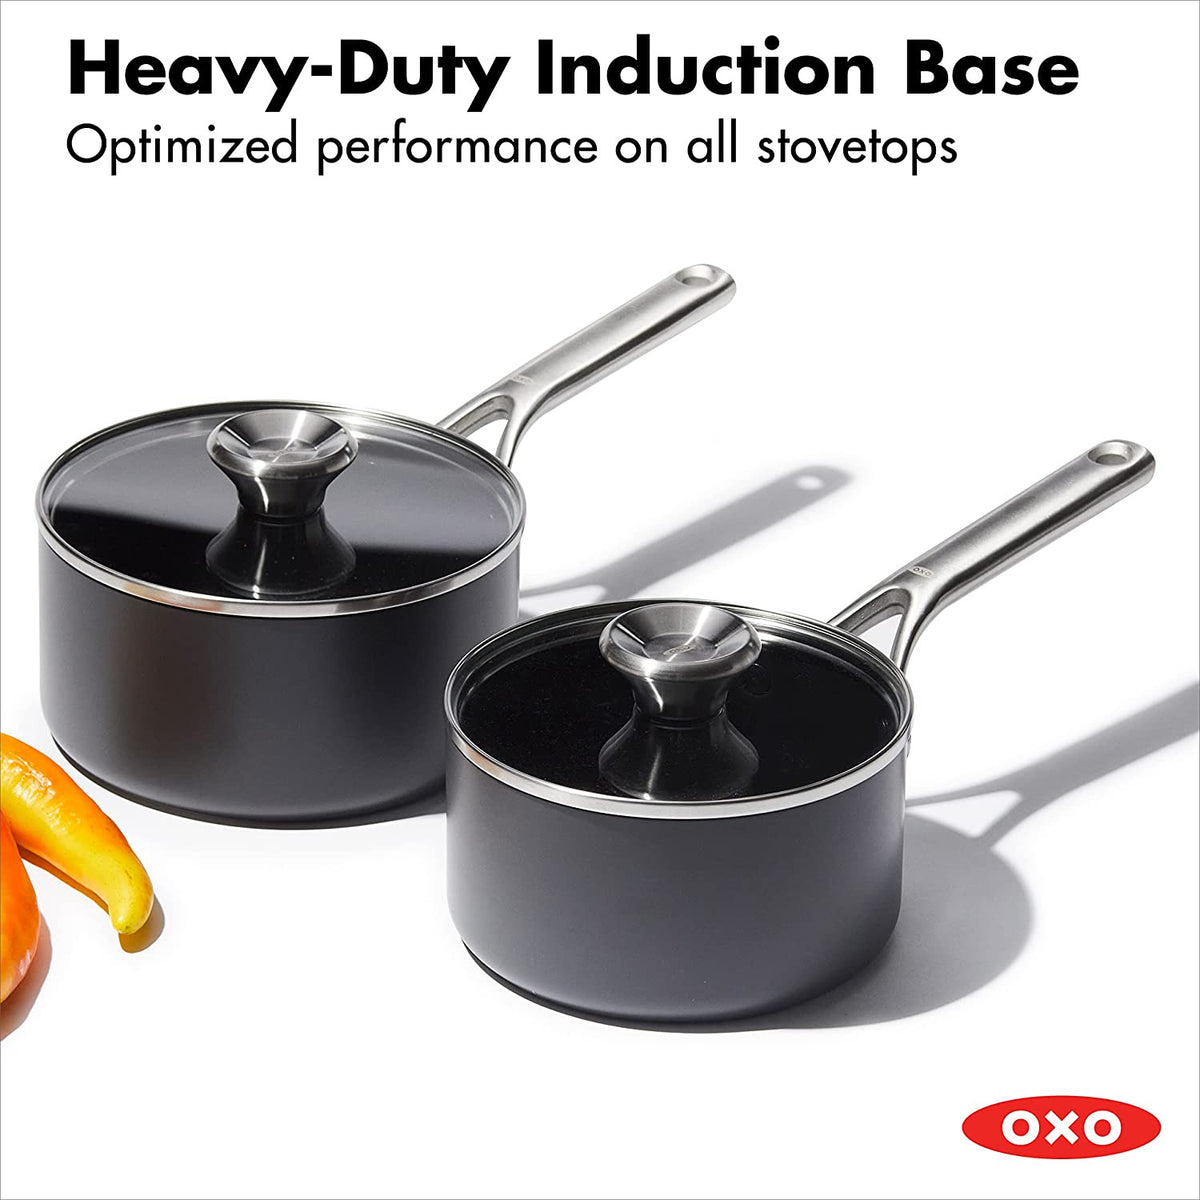 OXO Mira Tri-Ply Stainless Steel 1.5qt & 3qt Saucepan Set